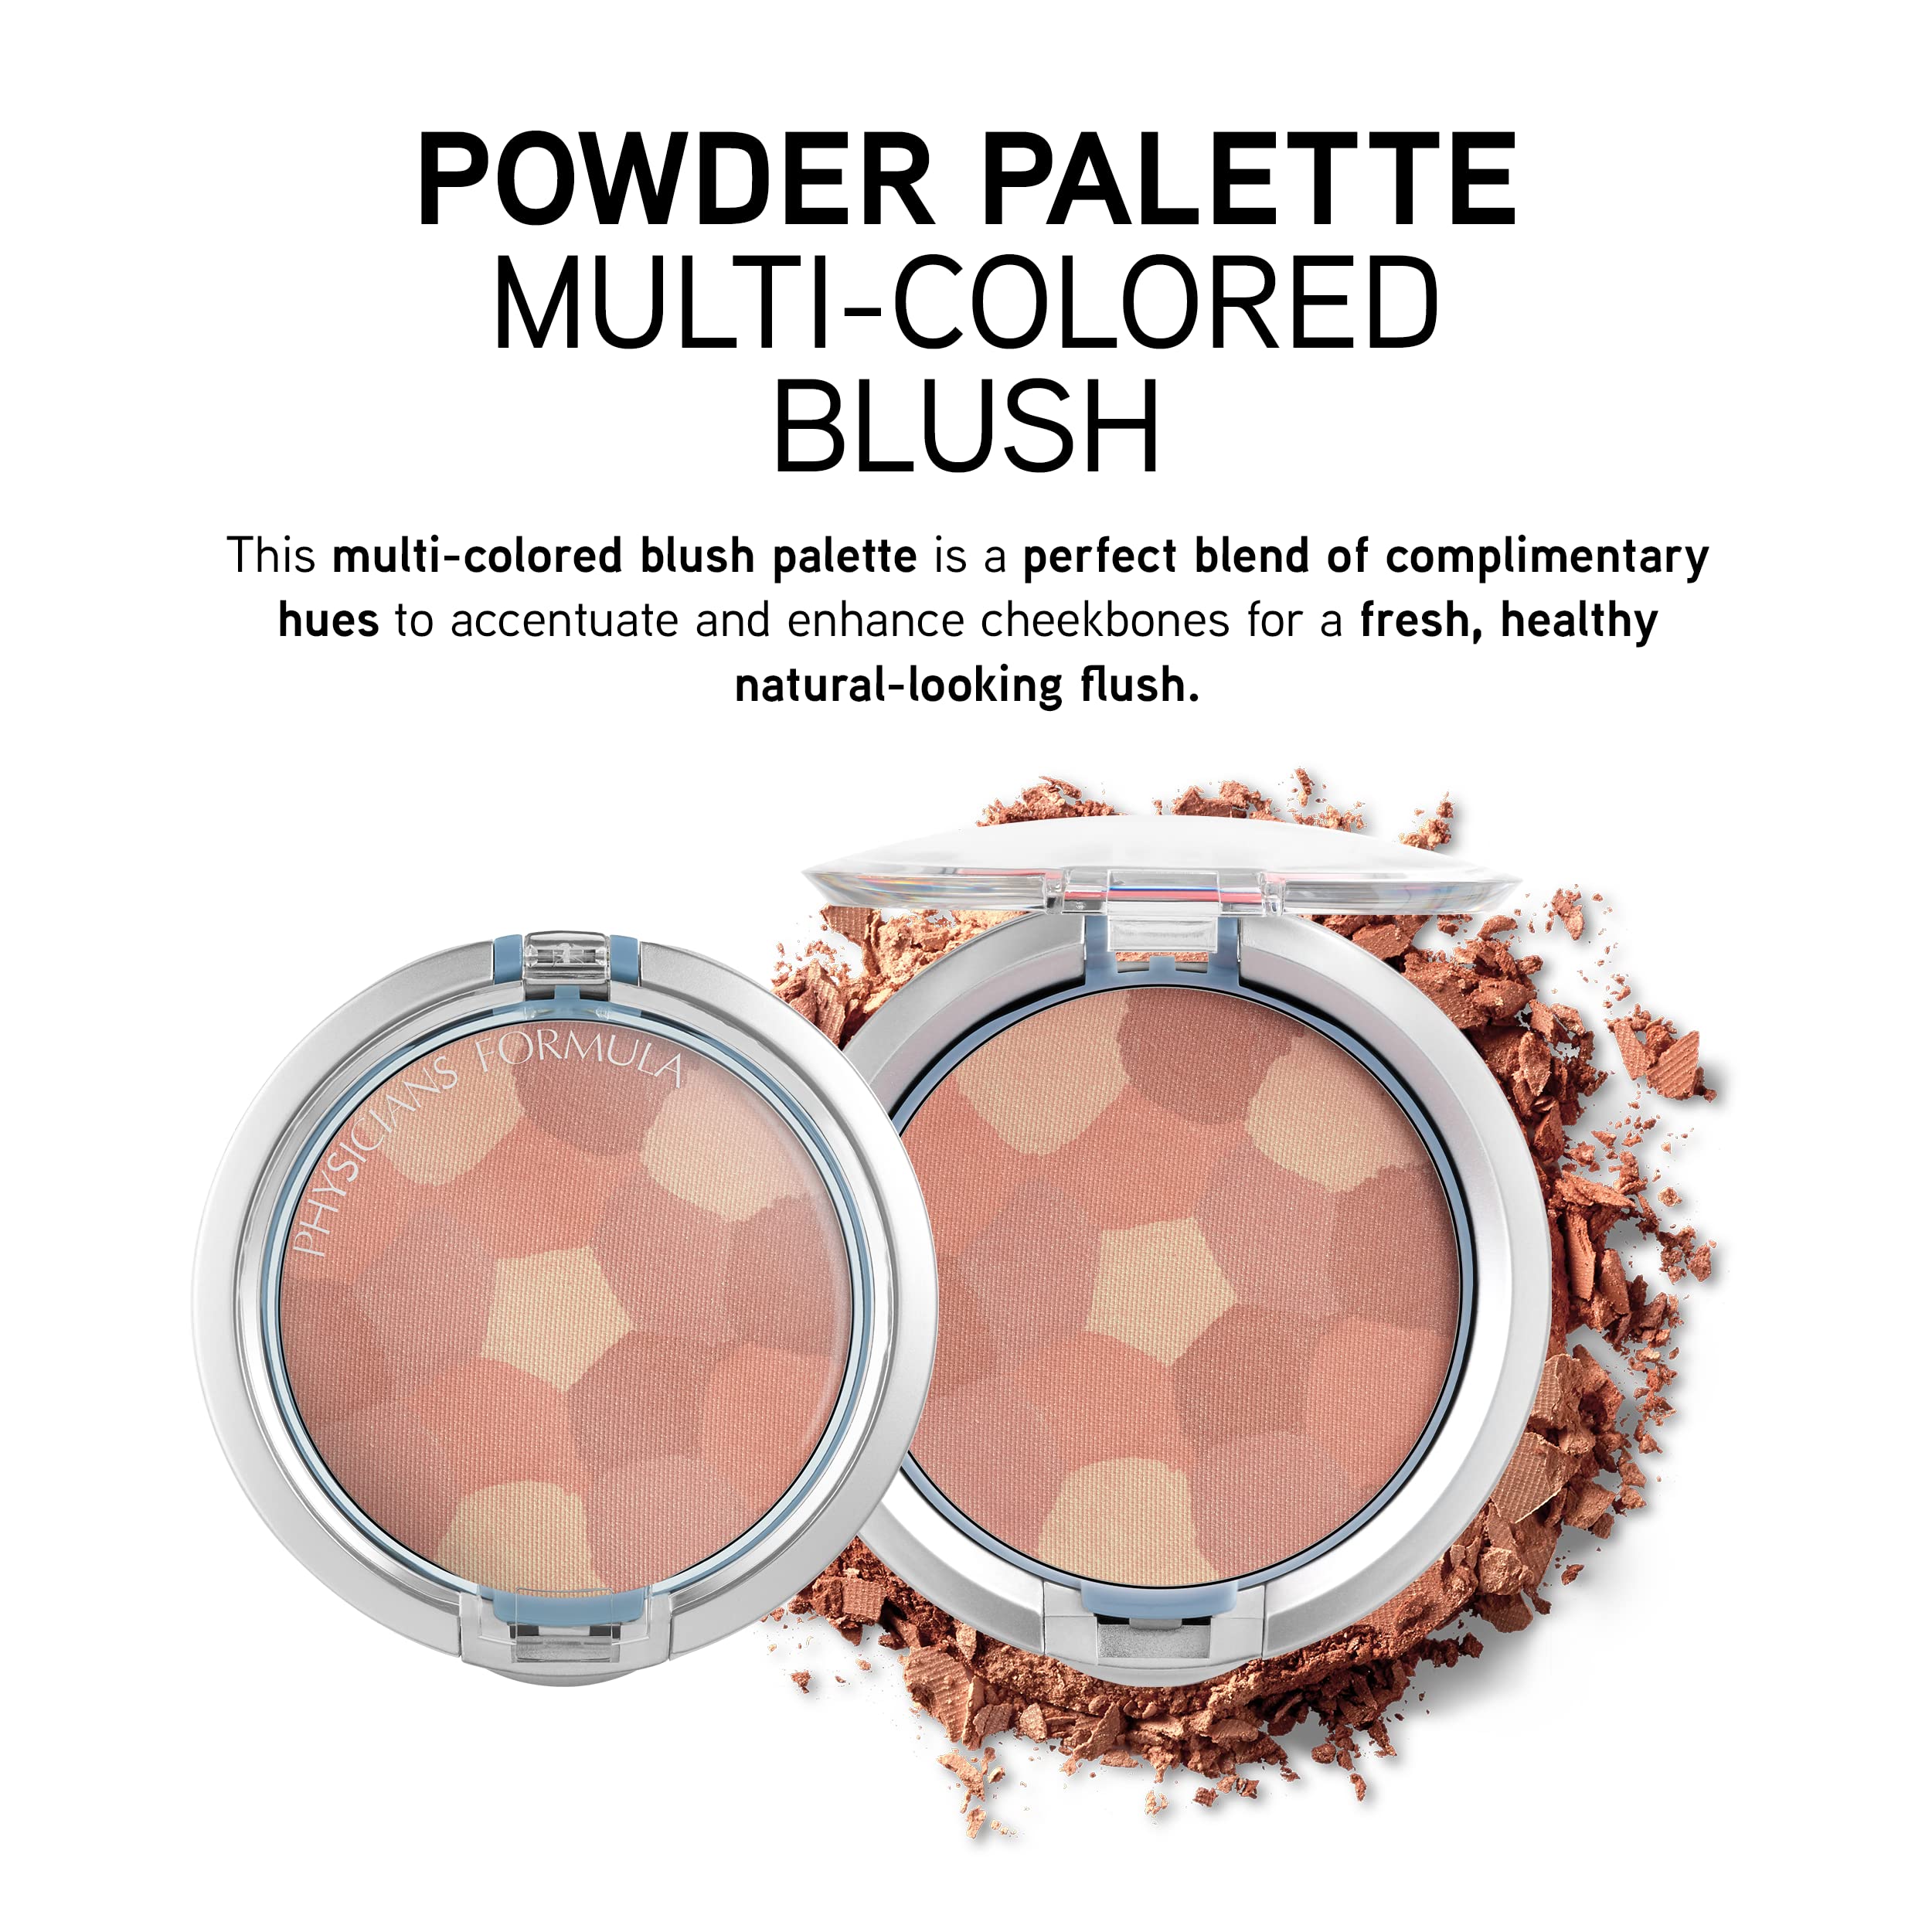 Physicians Formula Powder Palette Multi-Colored Blush Powder Blushing Rose, Dermatologist Tested